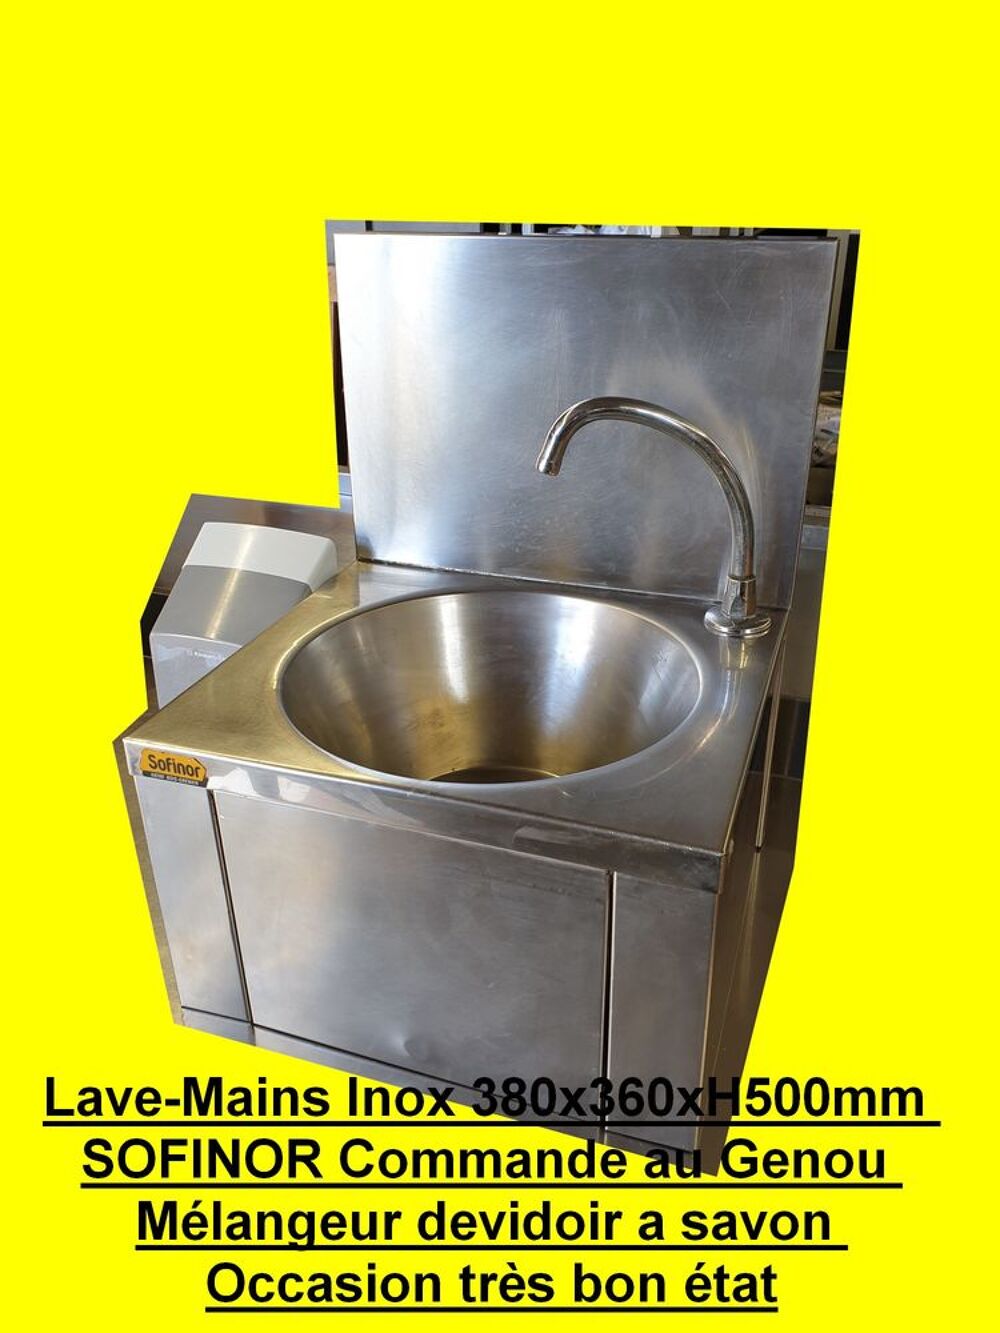   Lave-Mains Inox Commande au Genou Mlangeur dvidoir savon 